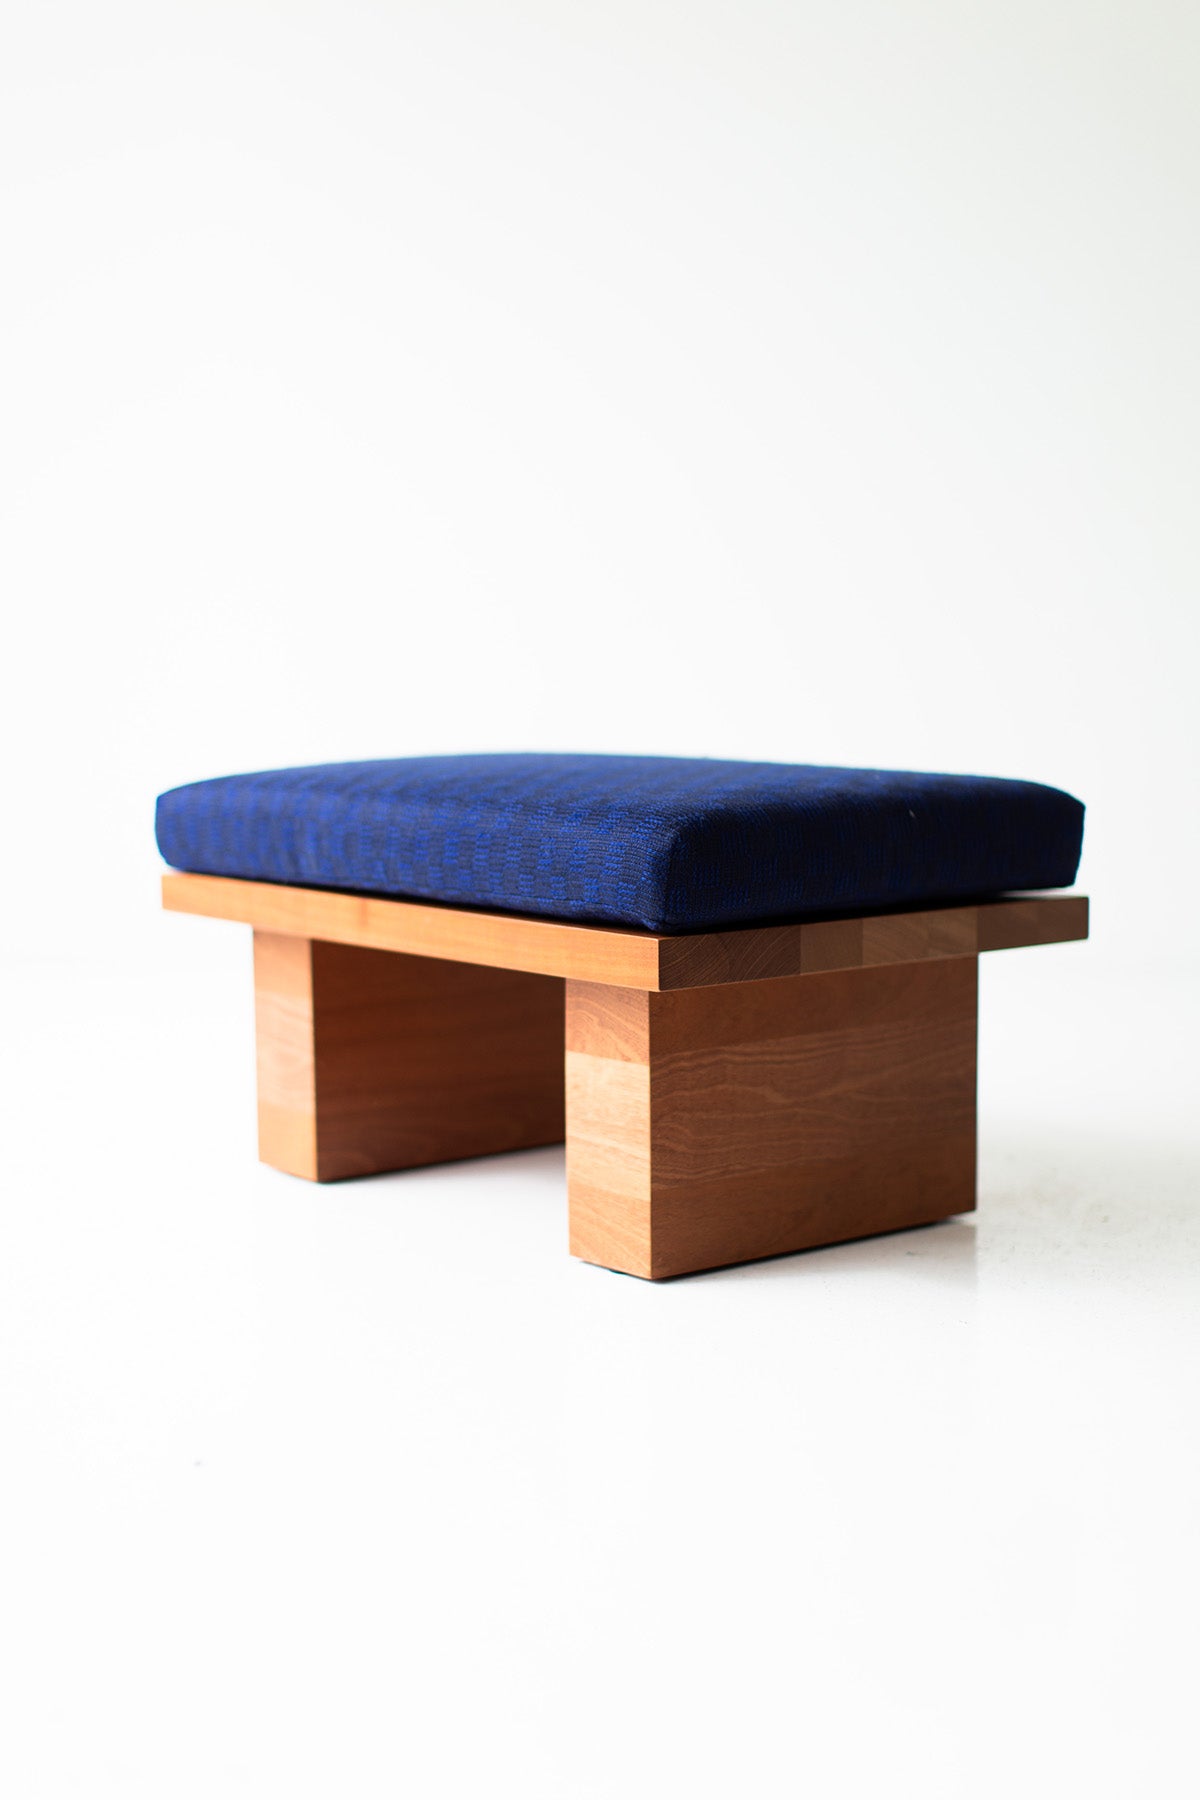 Suelo Modern Outdoor Ottoman, Upholstered for Bertu Home - 5623, 07